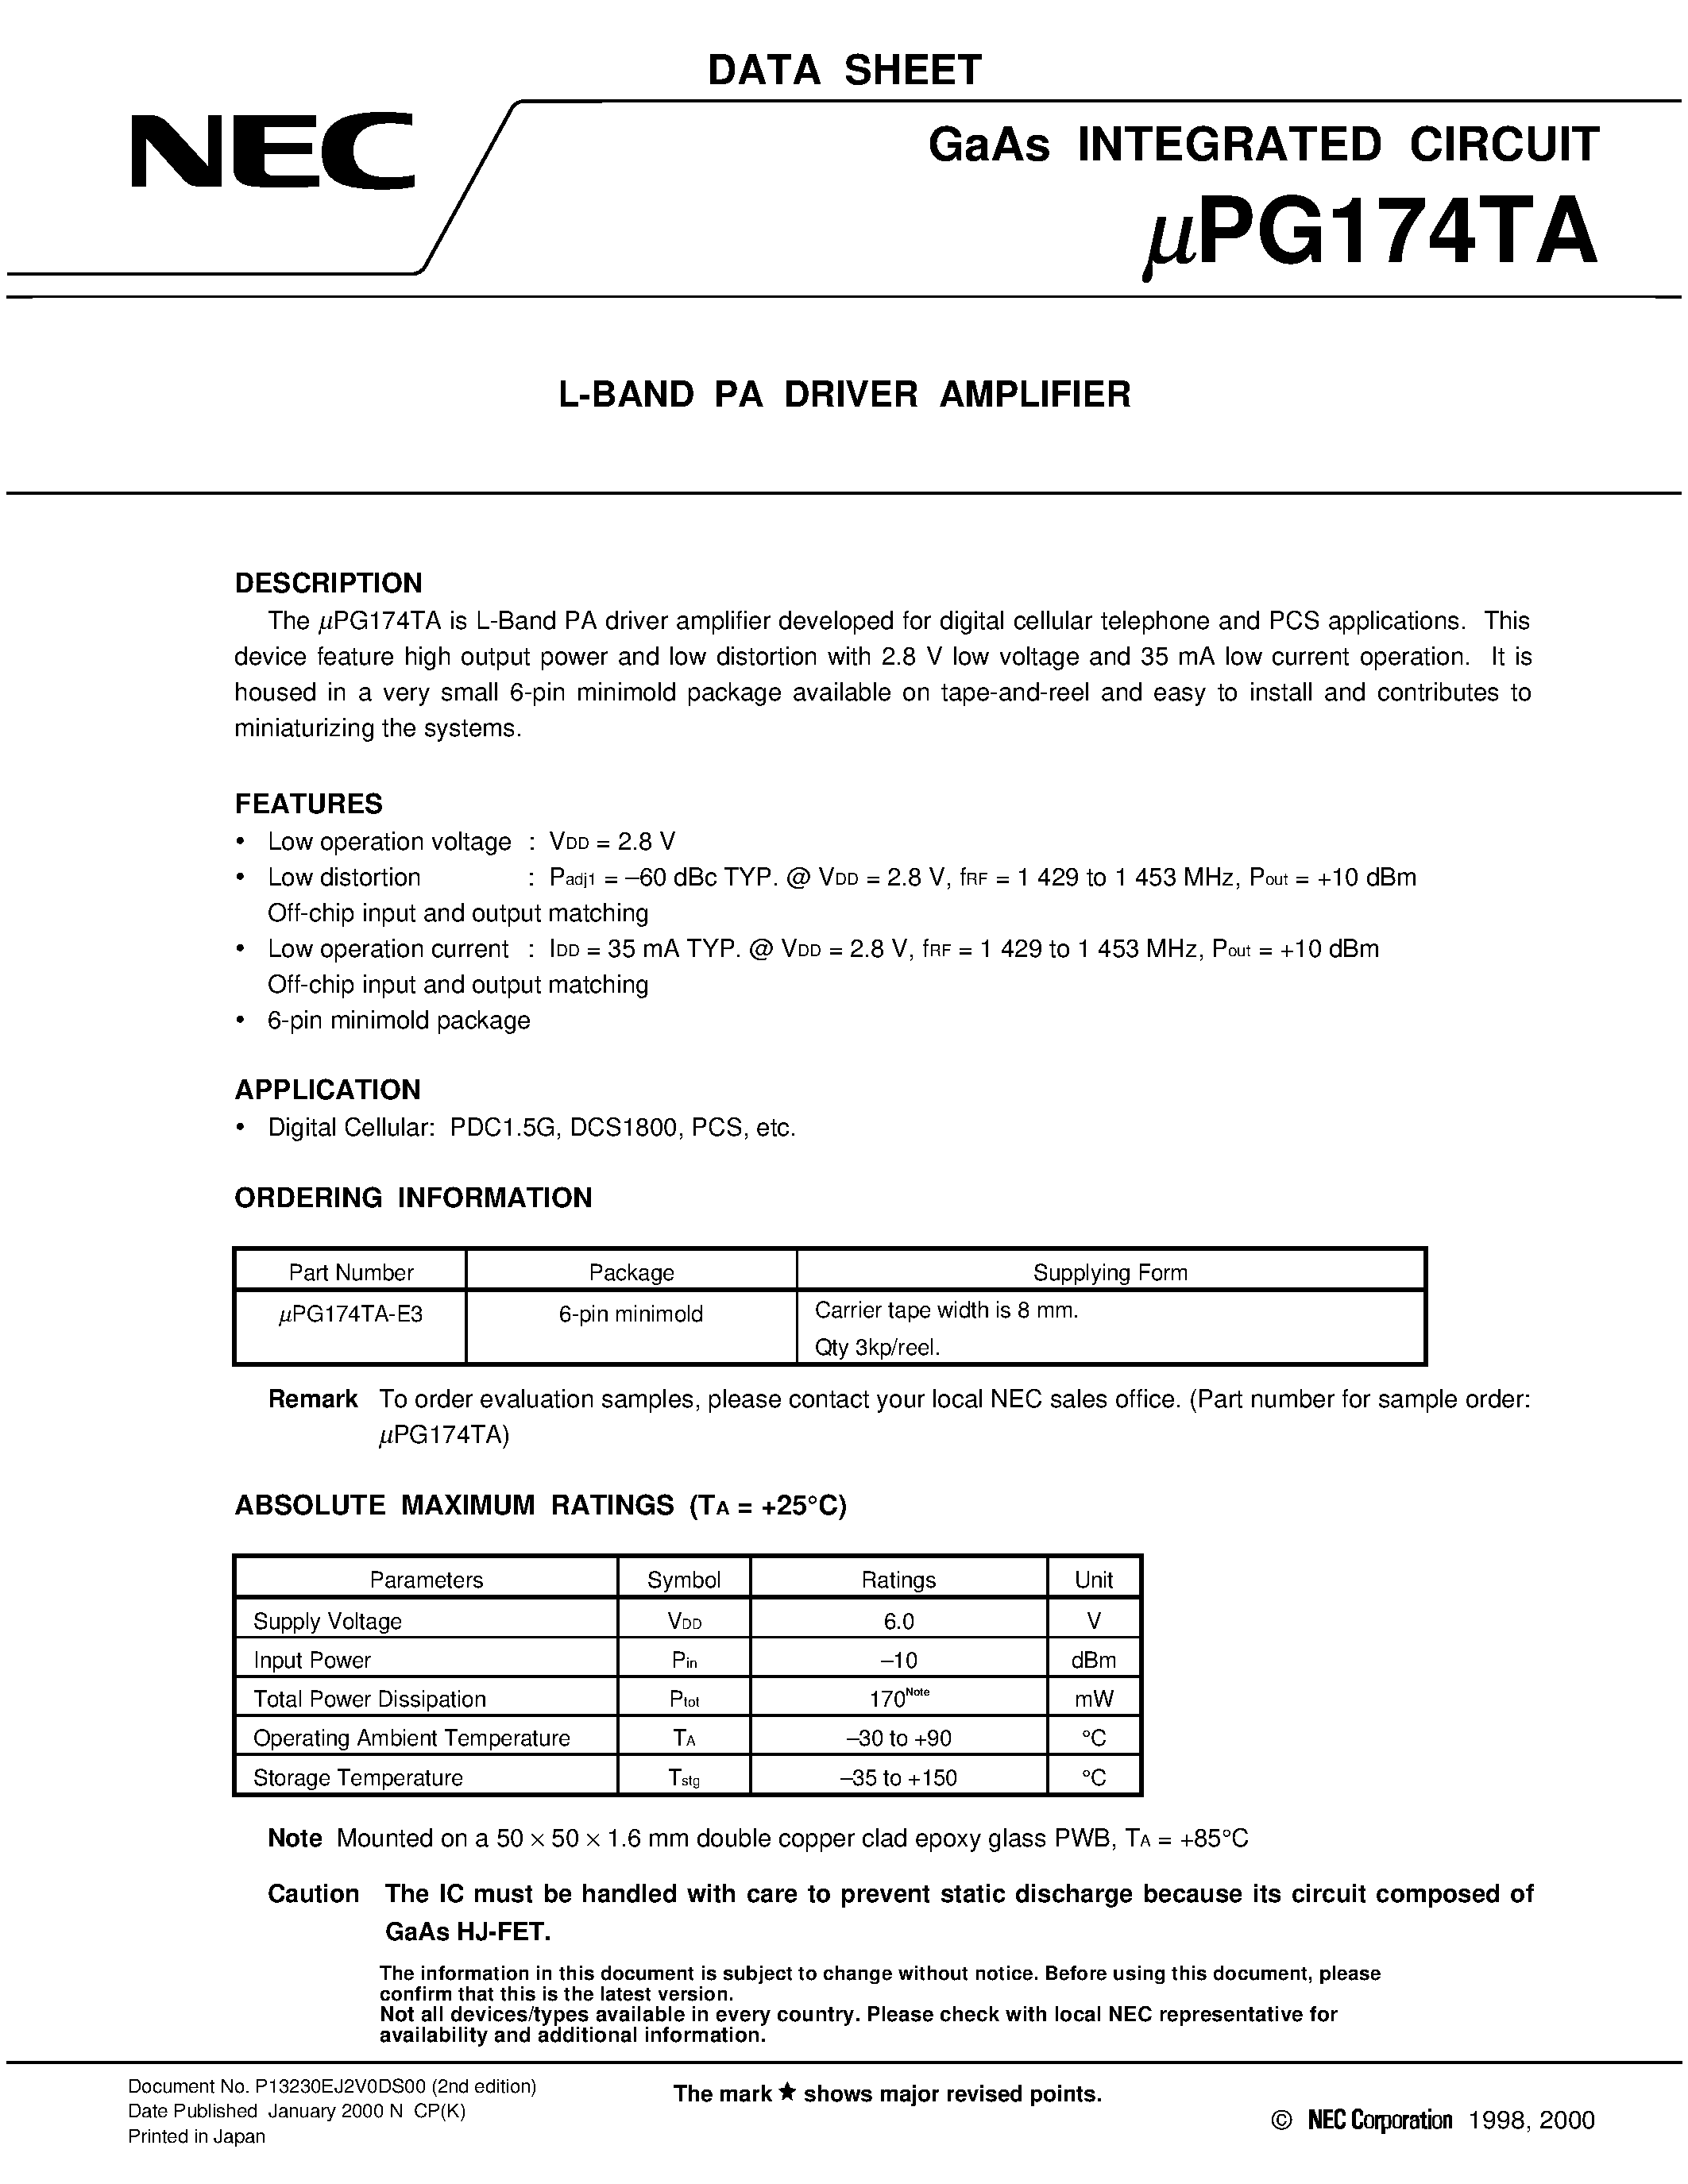 Даташит UPG174TA - L-BAND PA DRIVER AMPLIFIER страница 1